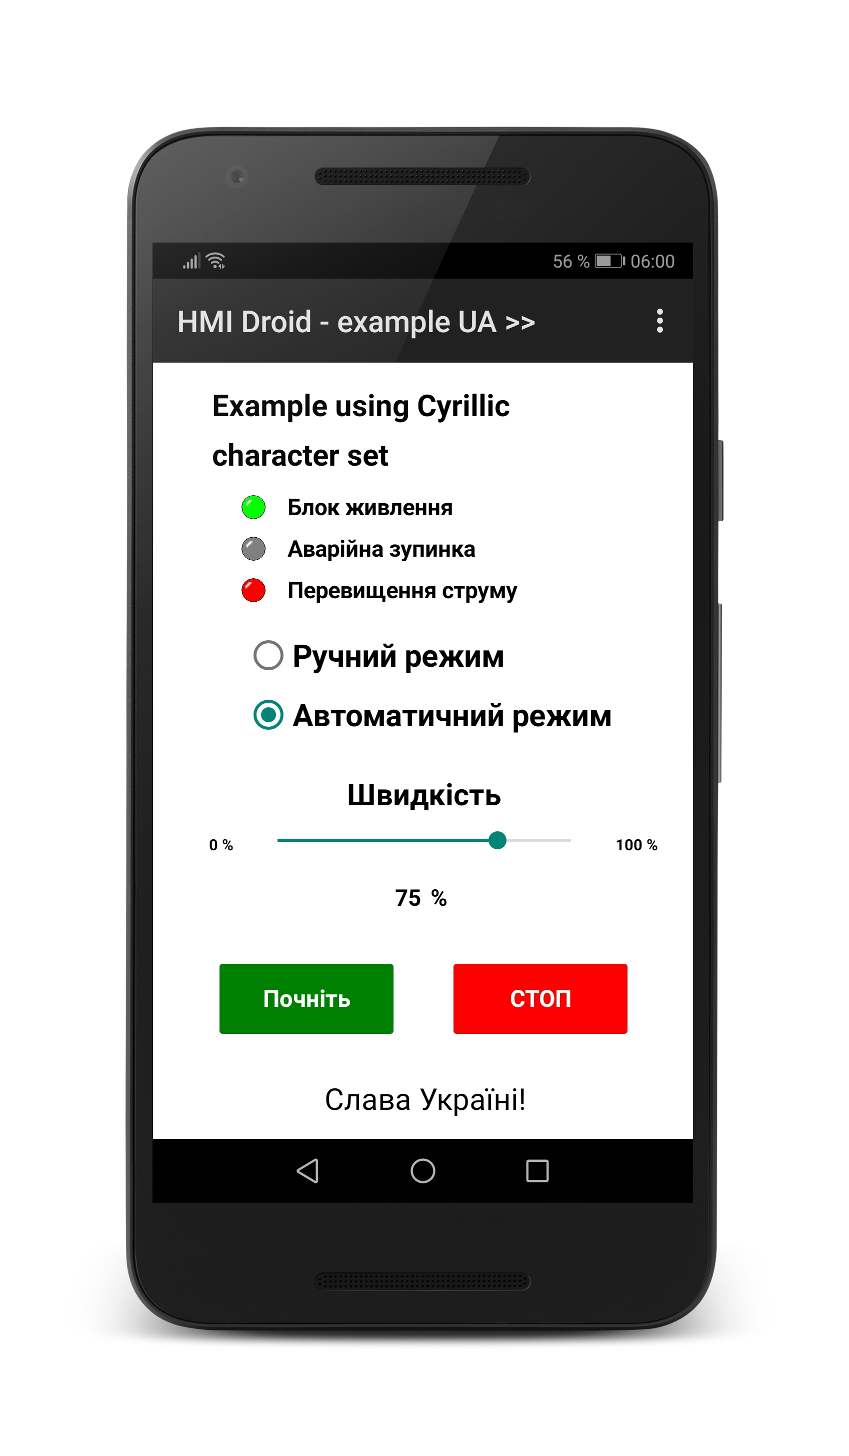 HMI Android cyrillic character set